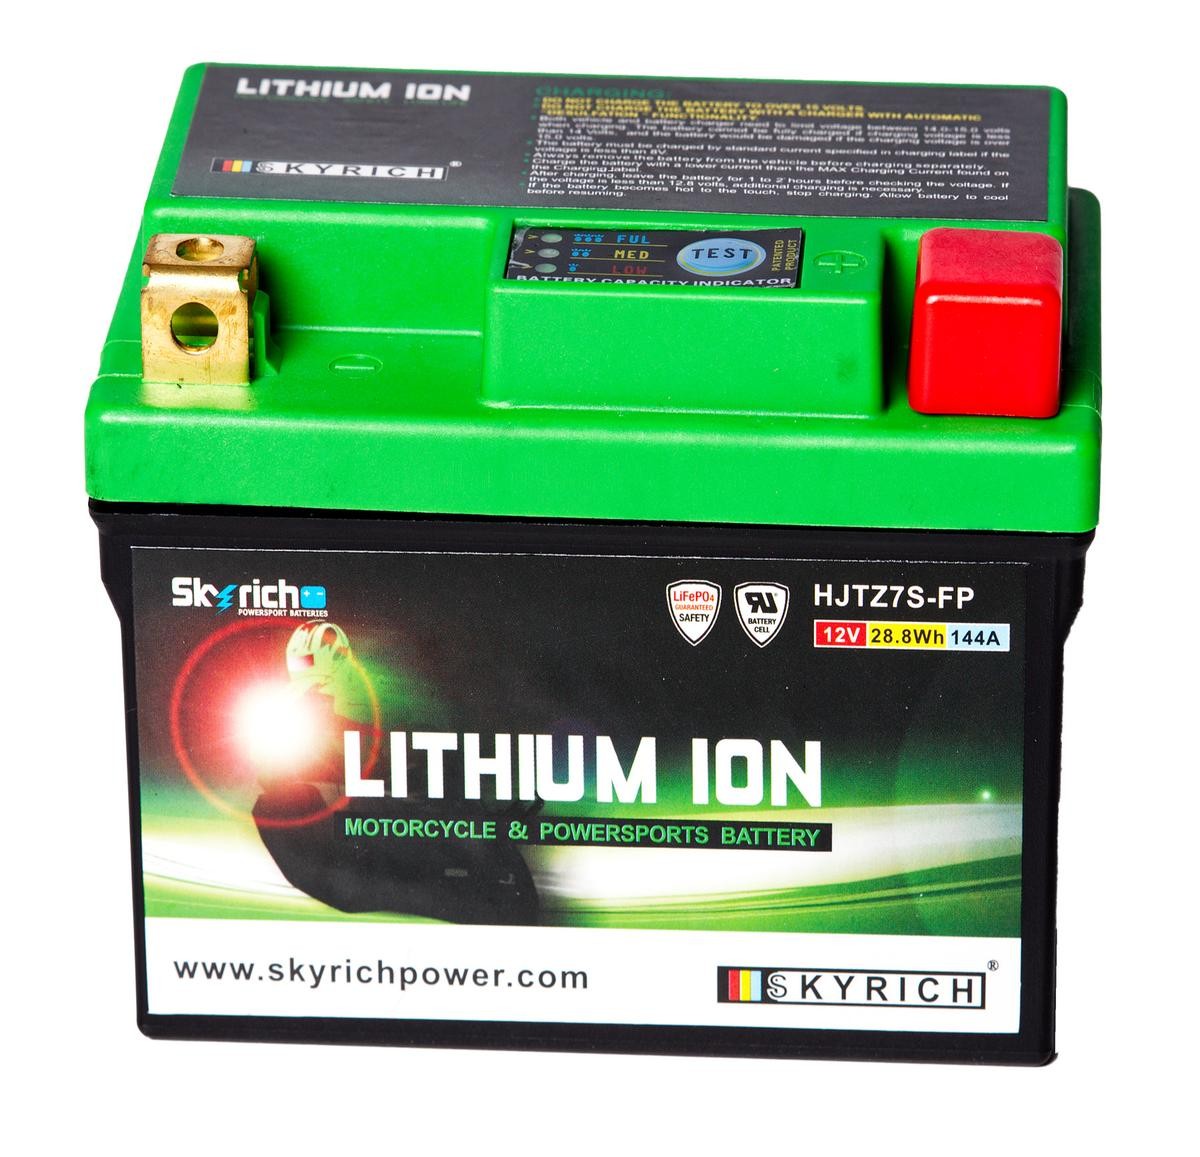 YAMAHA XVS Batterie 12,8V 2,4Ah 144A N Li-Ionen-Batterie SKYRICH LITHIUM ION HJTZ7S-FP